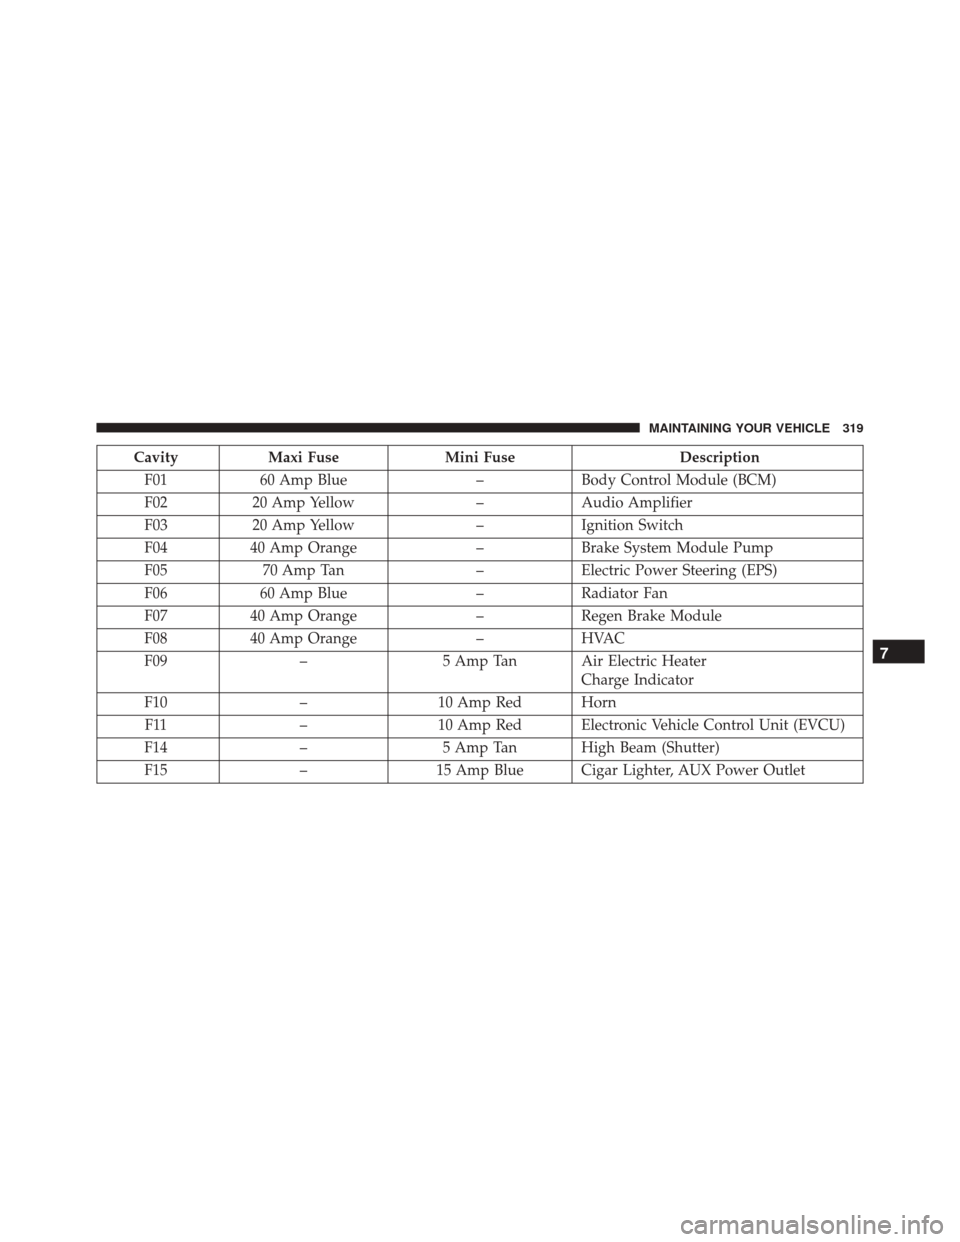 FIAT 500E 2016 2.G Owners Manual CavityMaxi Fuse Mini Fuse Description
F01 60 Amp Blue –Body Control Module (BCM)
F02 20 Amp Yellow –Audio Amplifier
F03 20 Amp Yellow –Ignition Switch
F04 40 Amp Orange –Brake System Module Pu